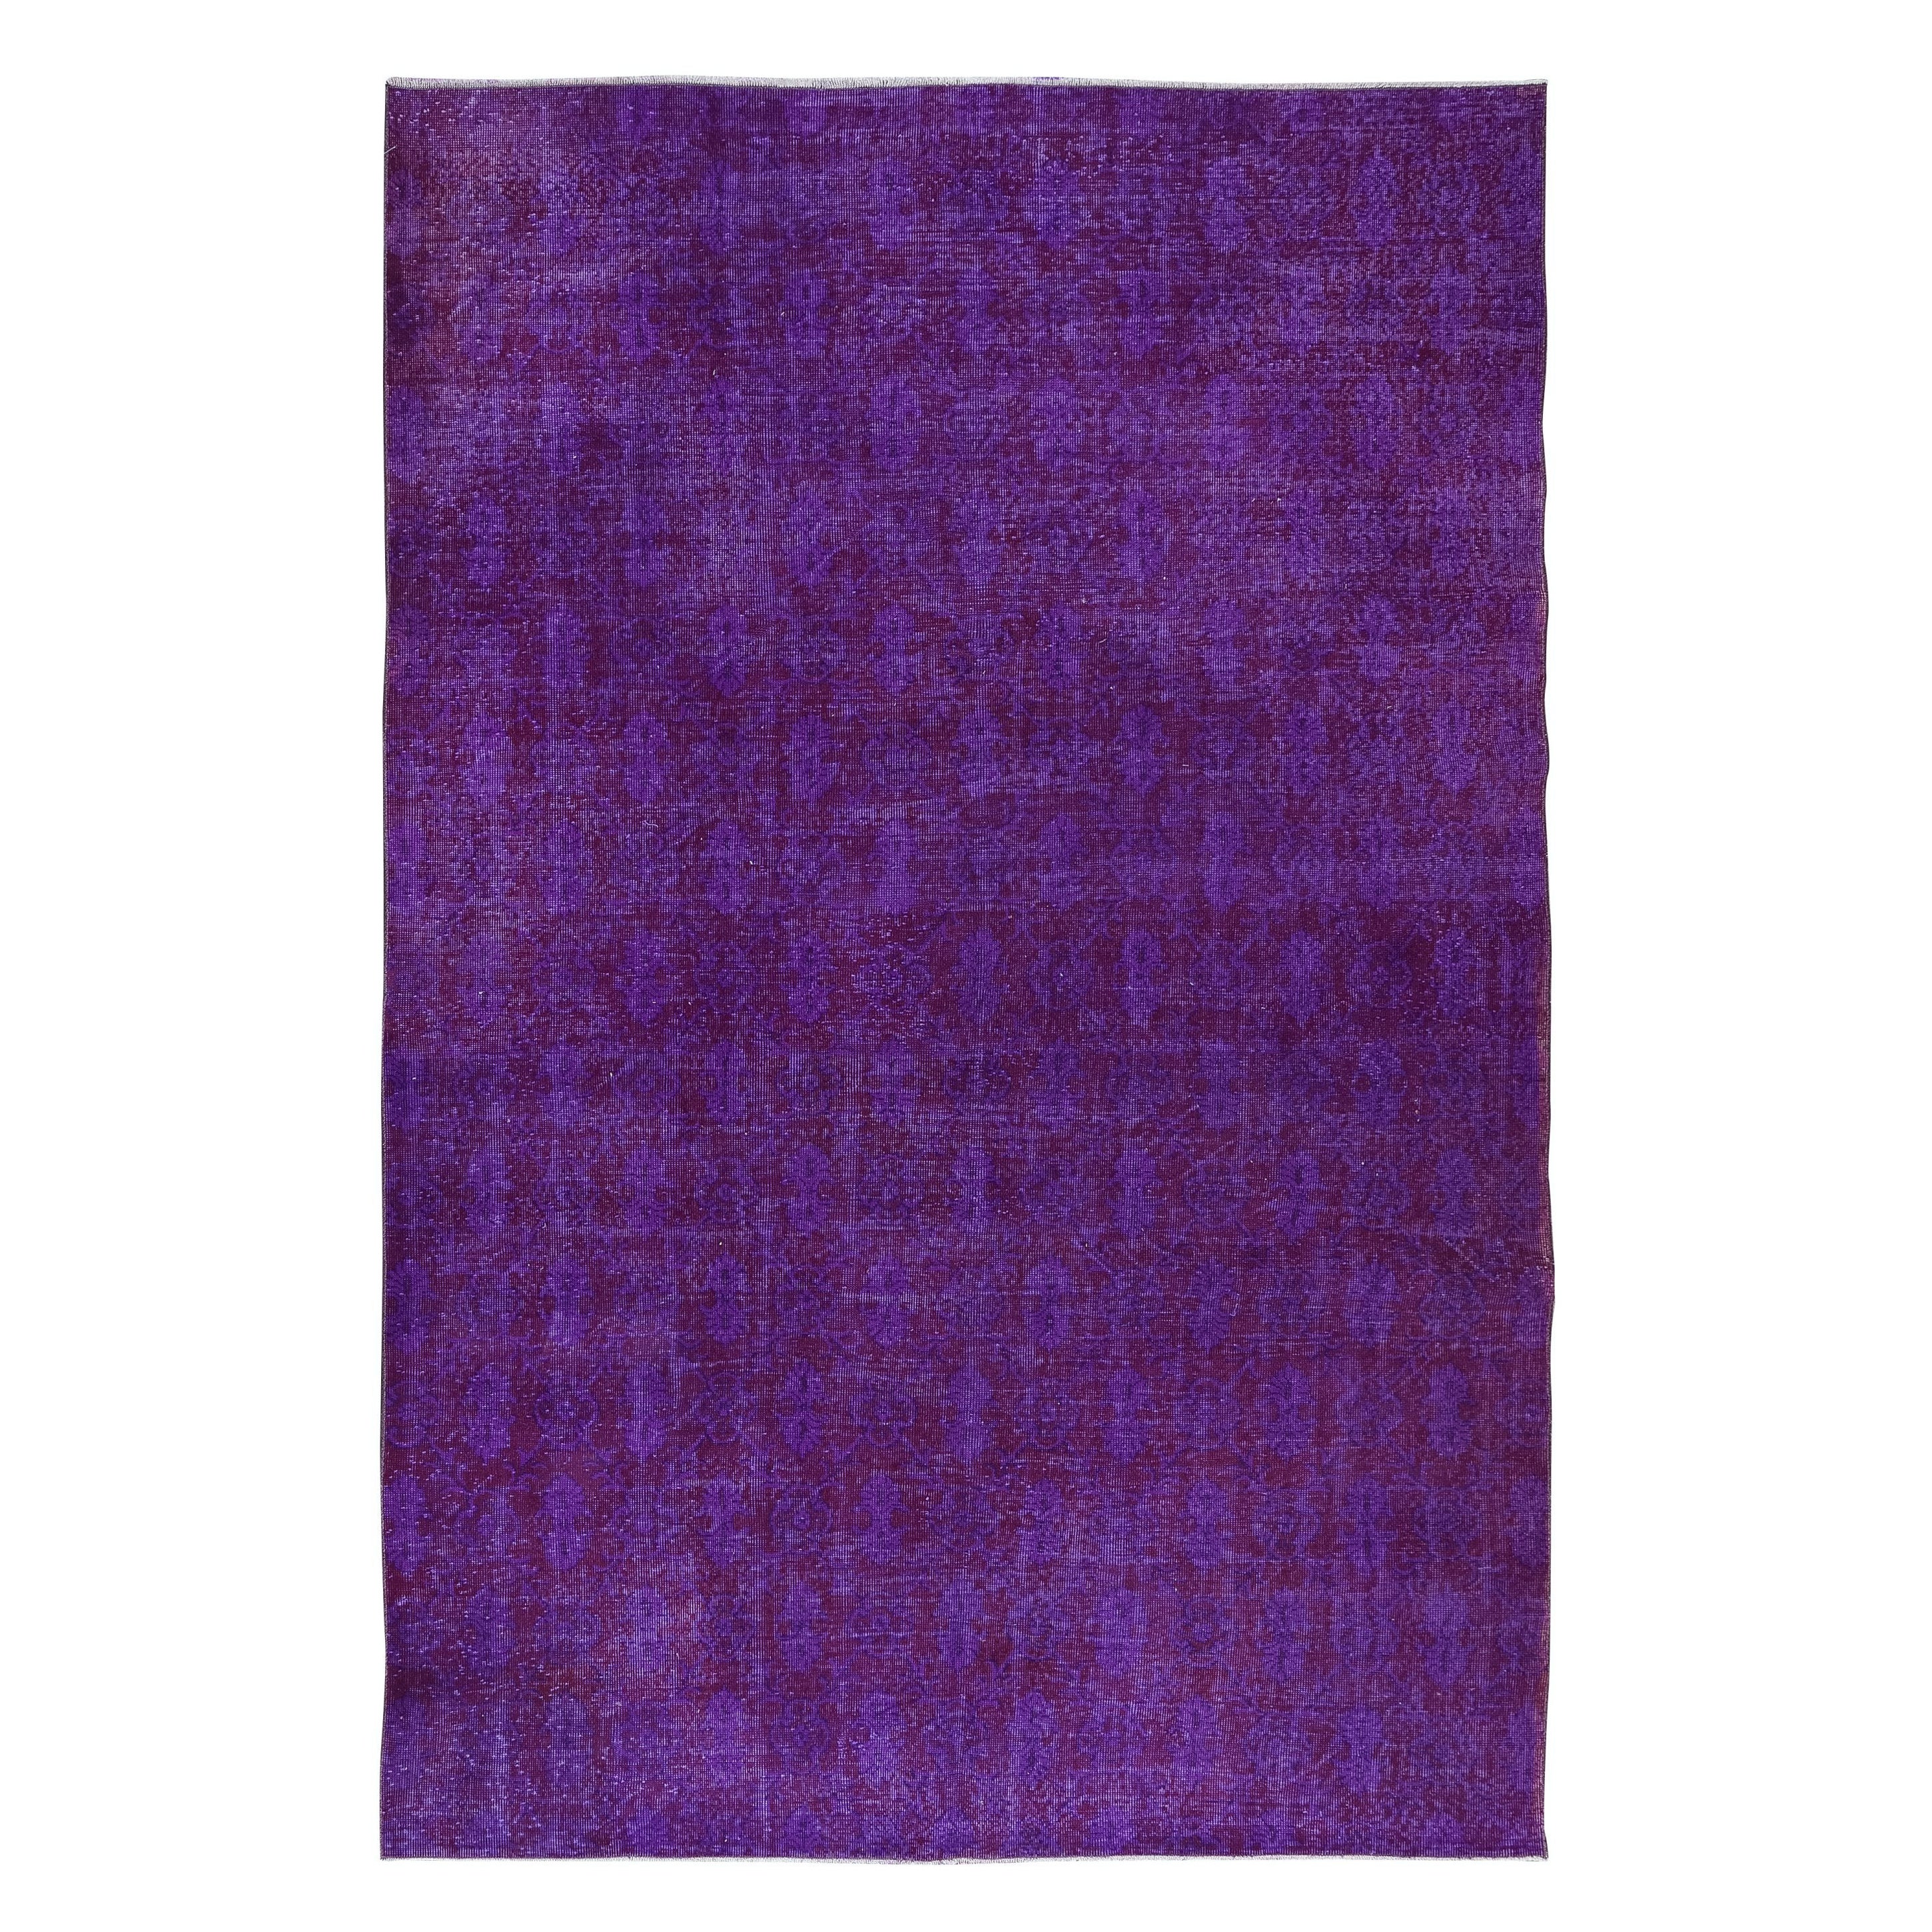 7.3x11 Ft Large Modern Handmade Turkish Wool Area Rug in Purple Colors